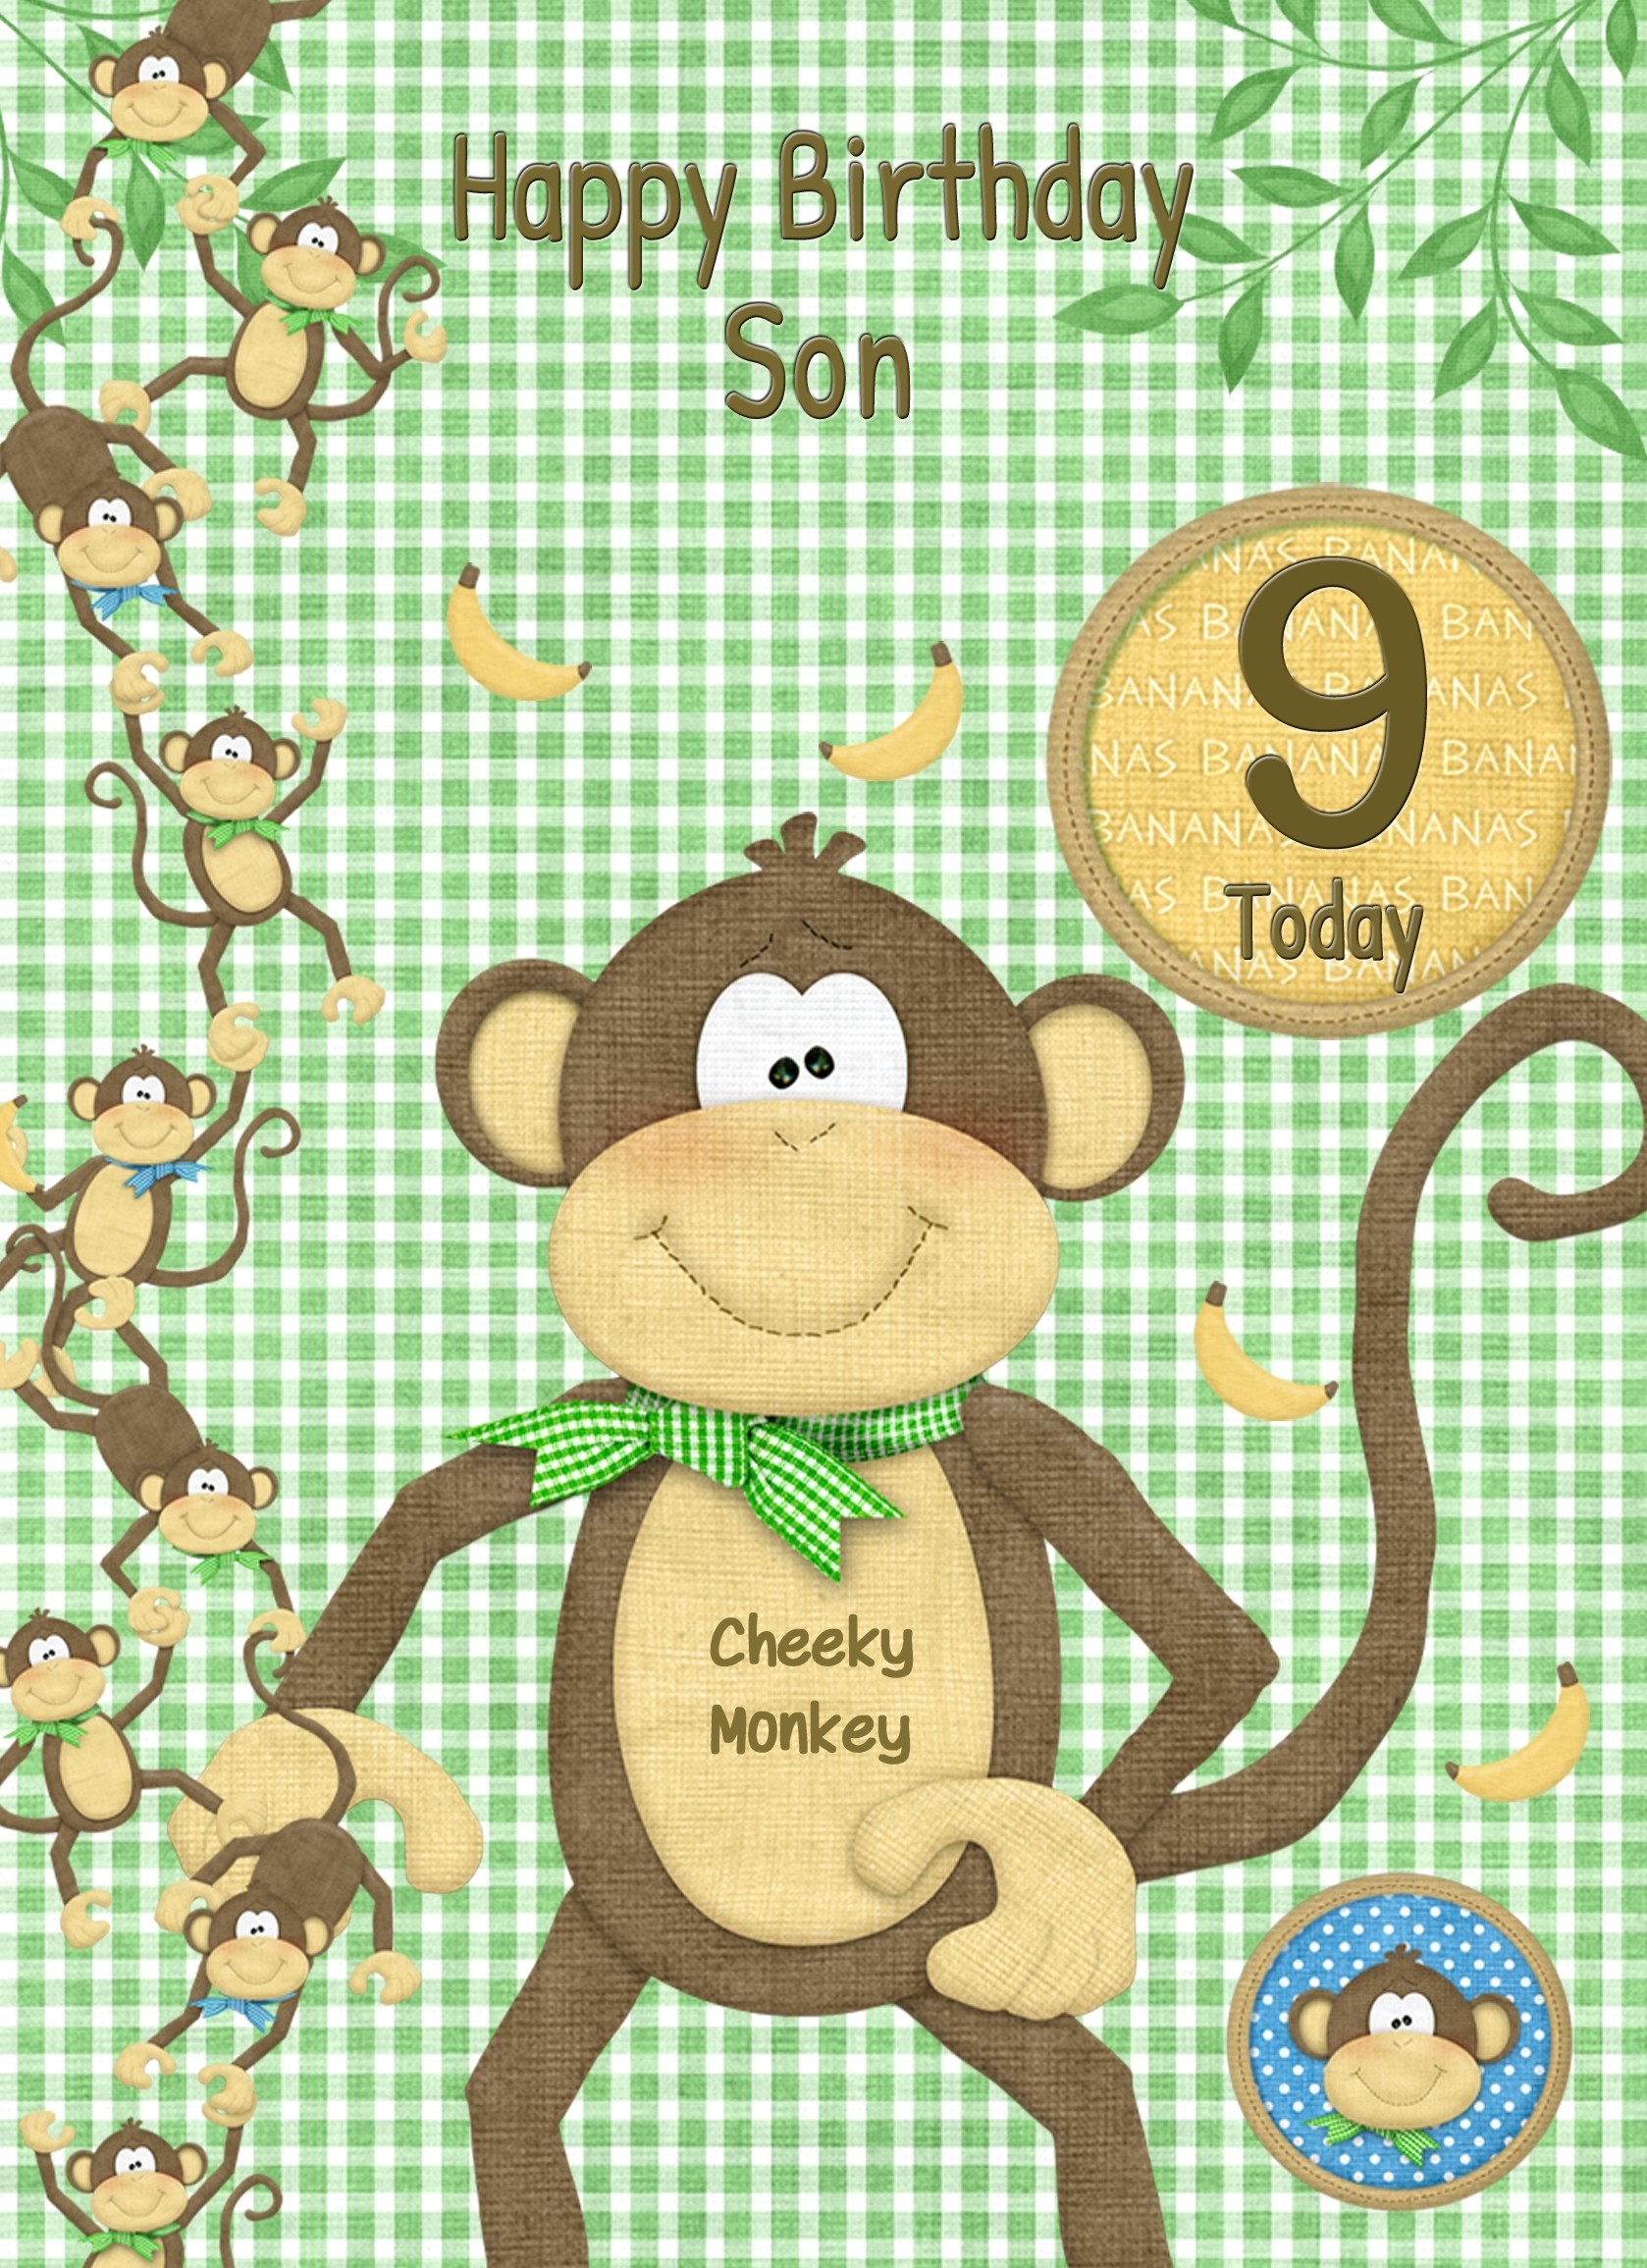 Kids 9th Birthday Cheeky Monkey Cartoon Card for Son